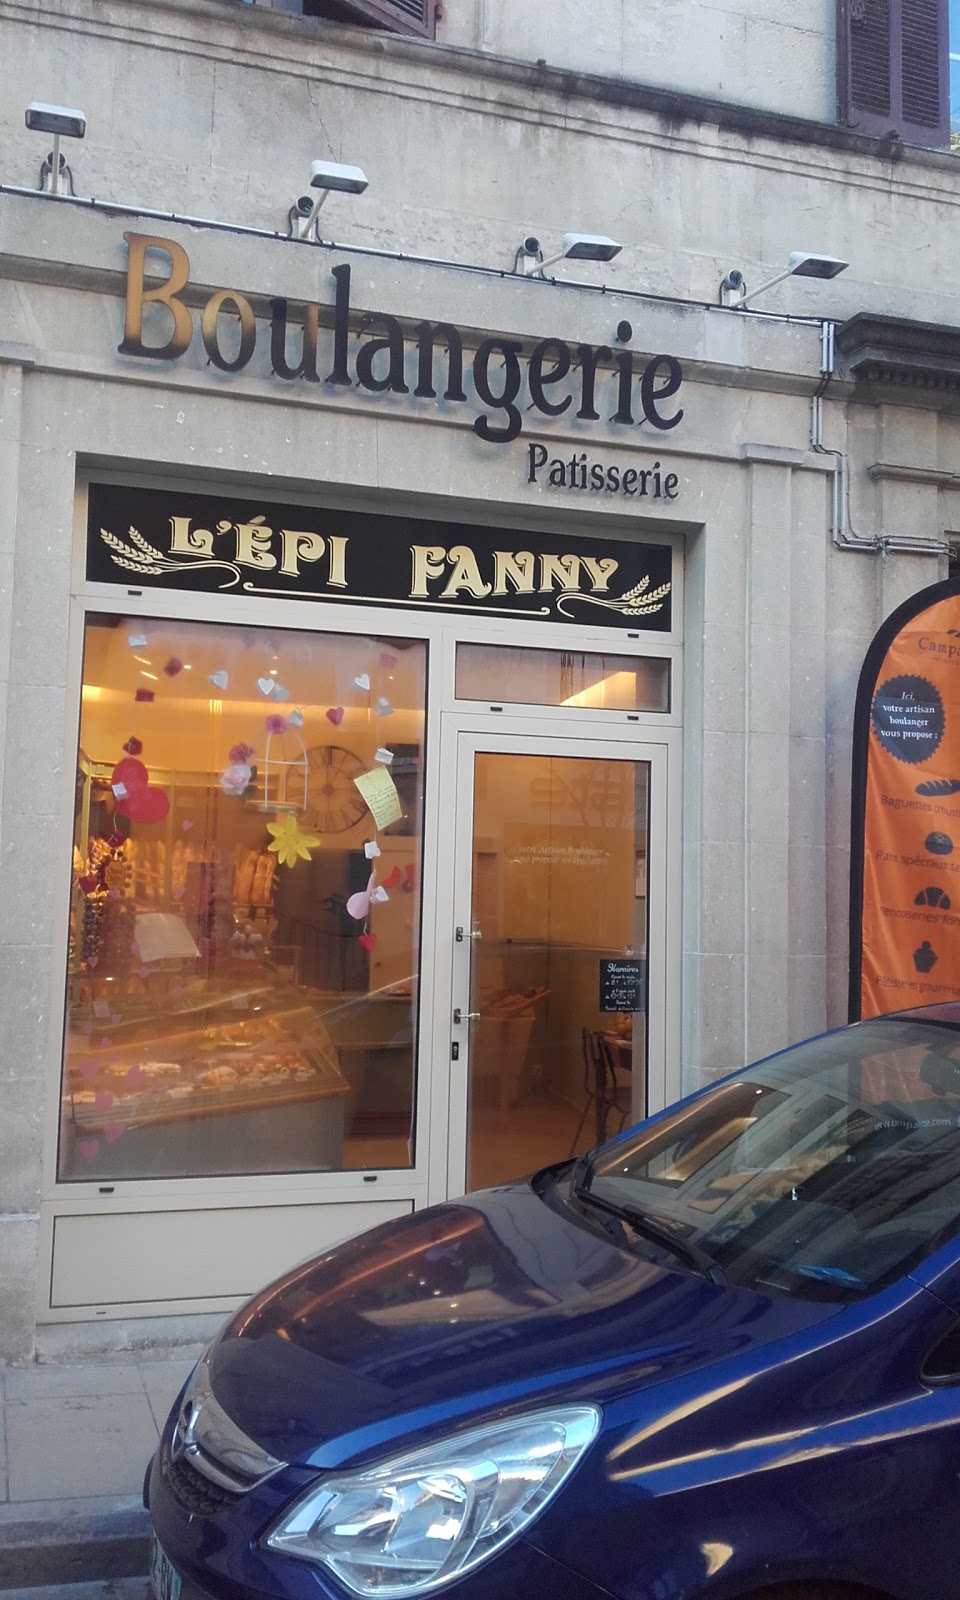 Boulangerie L'epi Fanny